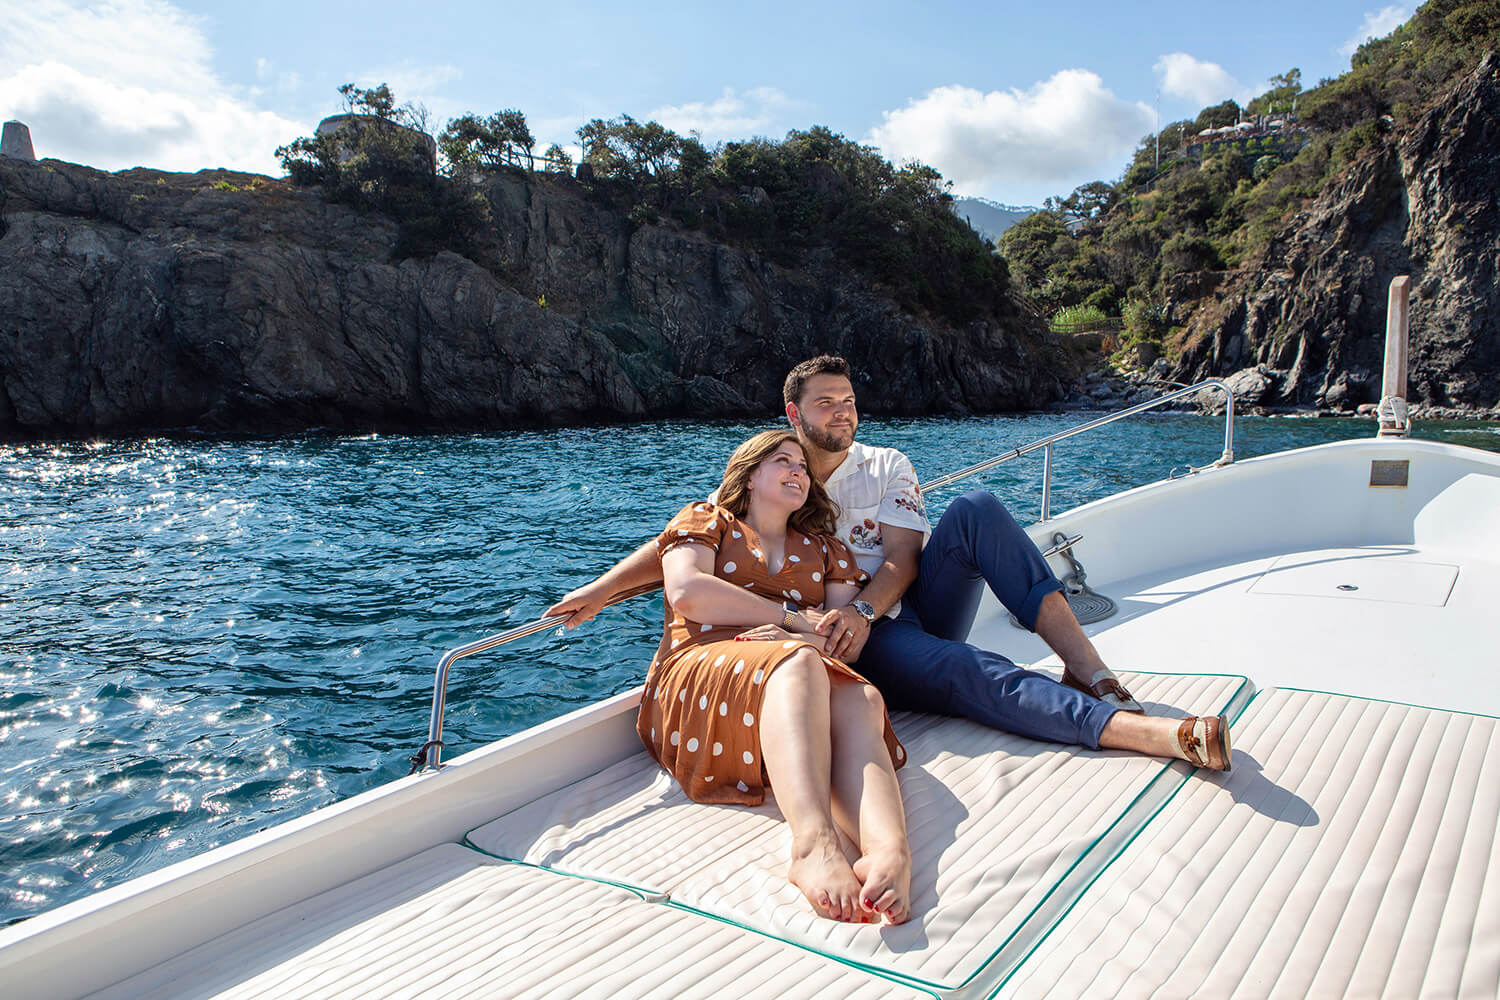 Couple on a boat in Monterosso, Cinque Terre, Italy